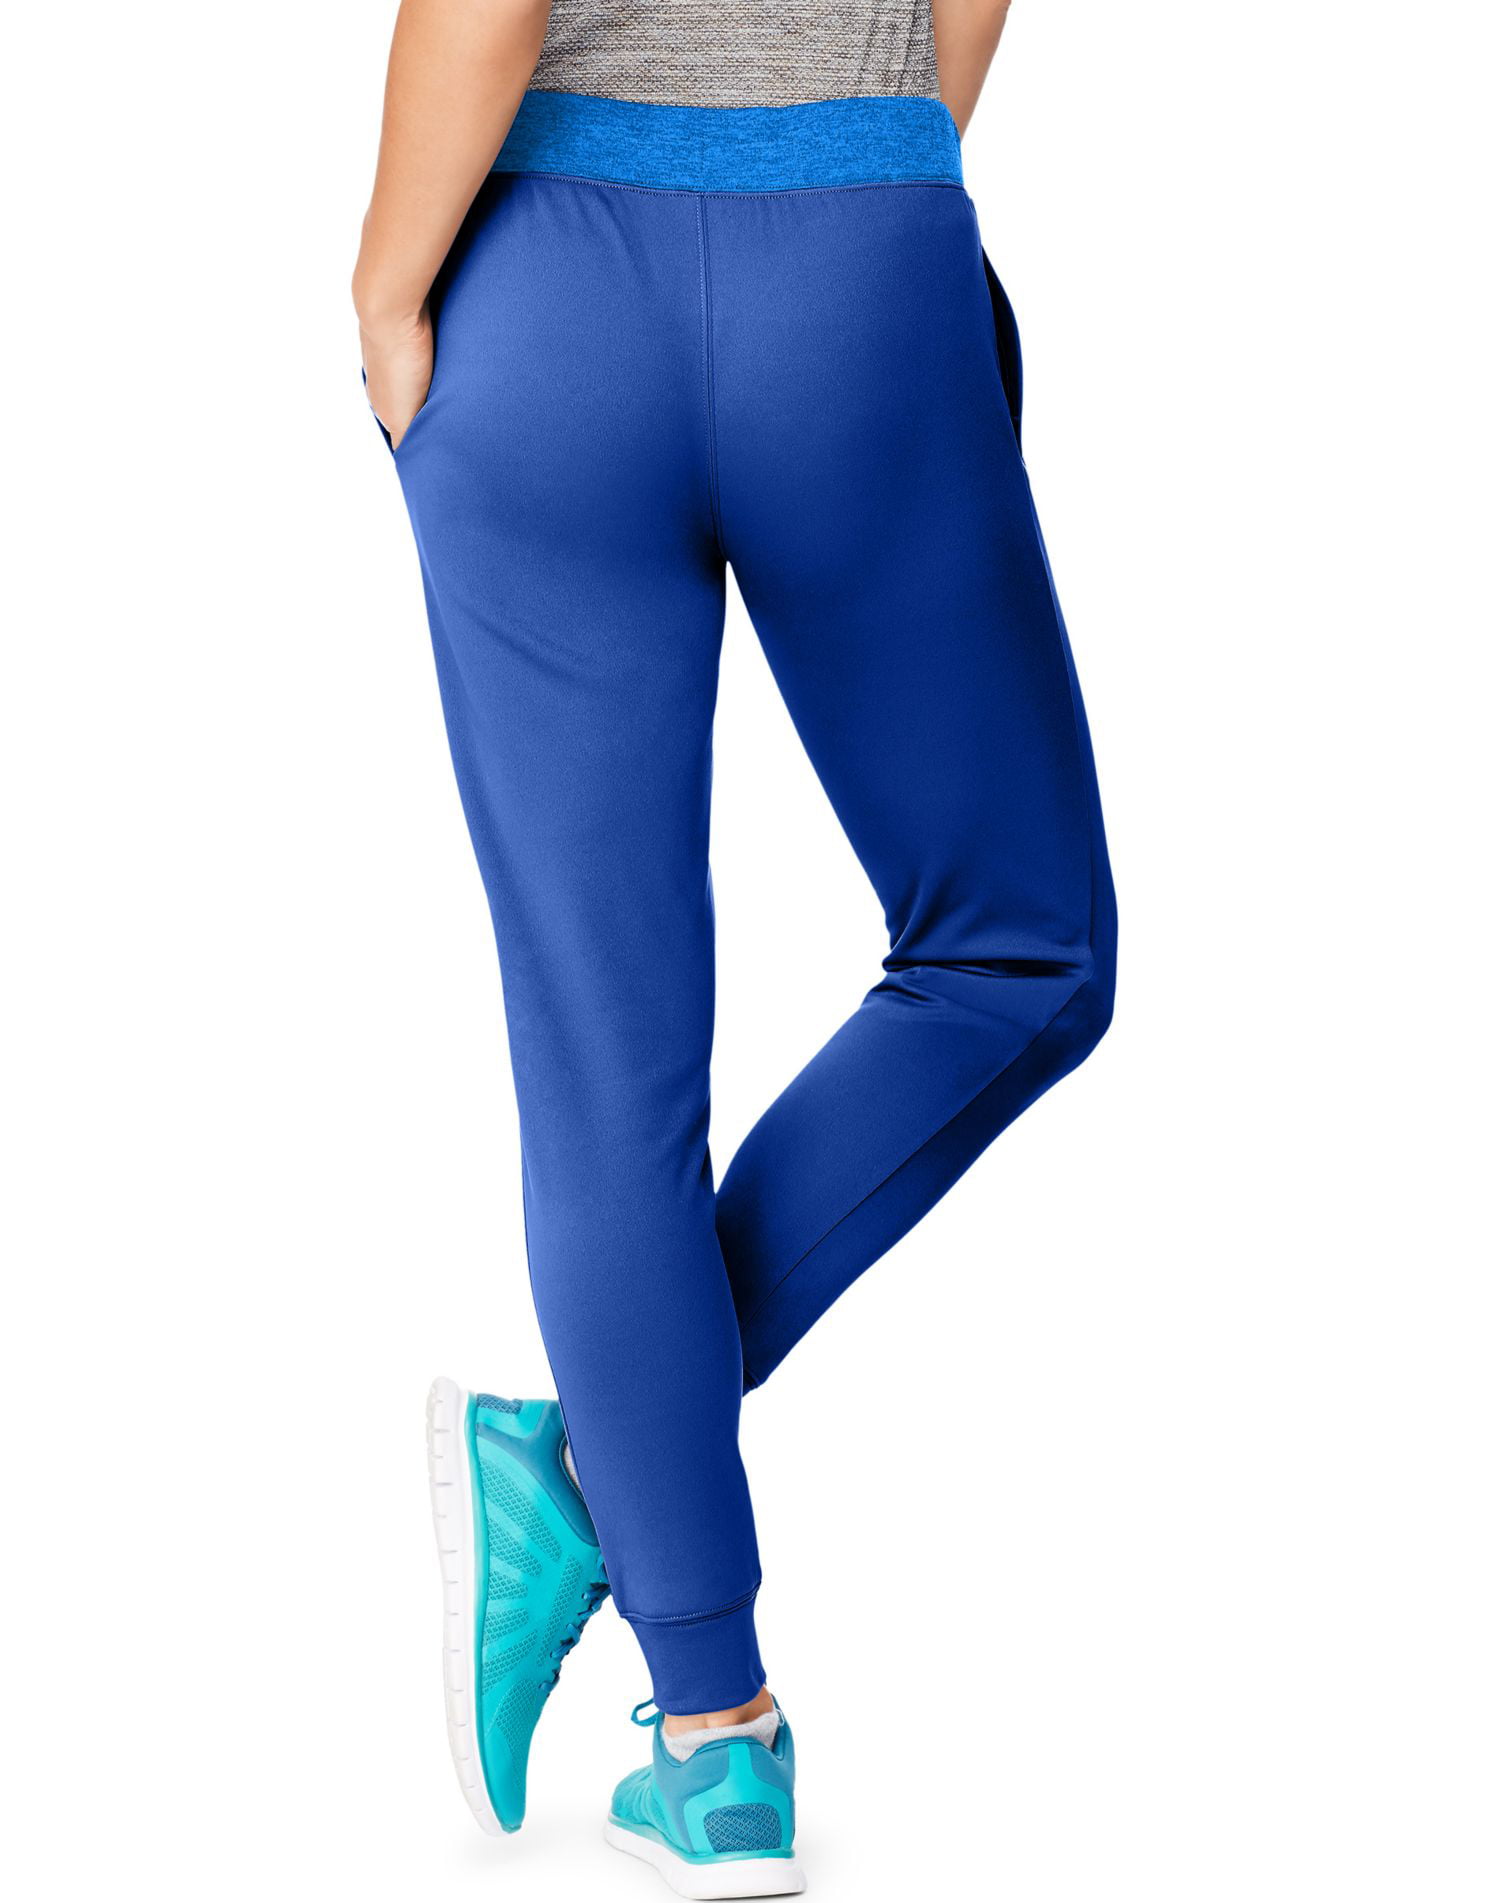 Hanes Sport Women's Performance Fleece Jogger Pants with Pockets -  Walmart.com